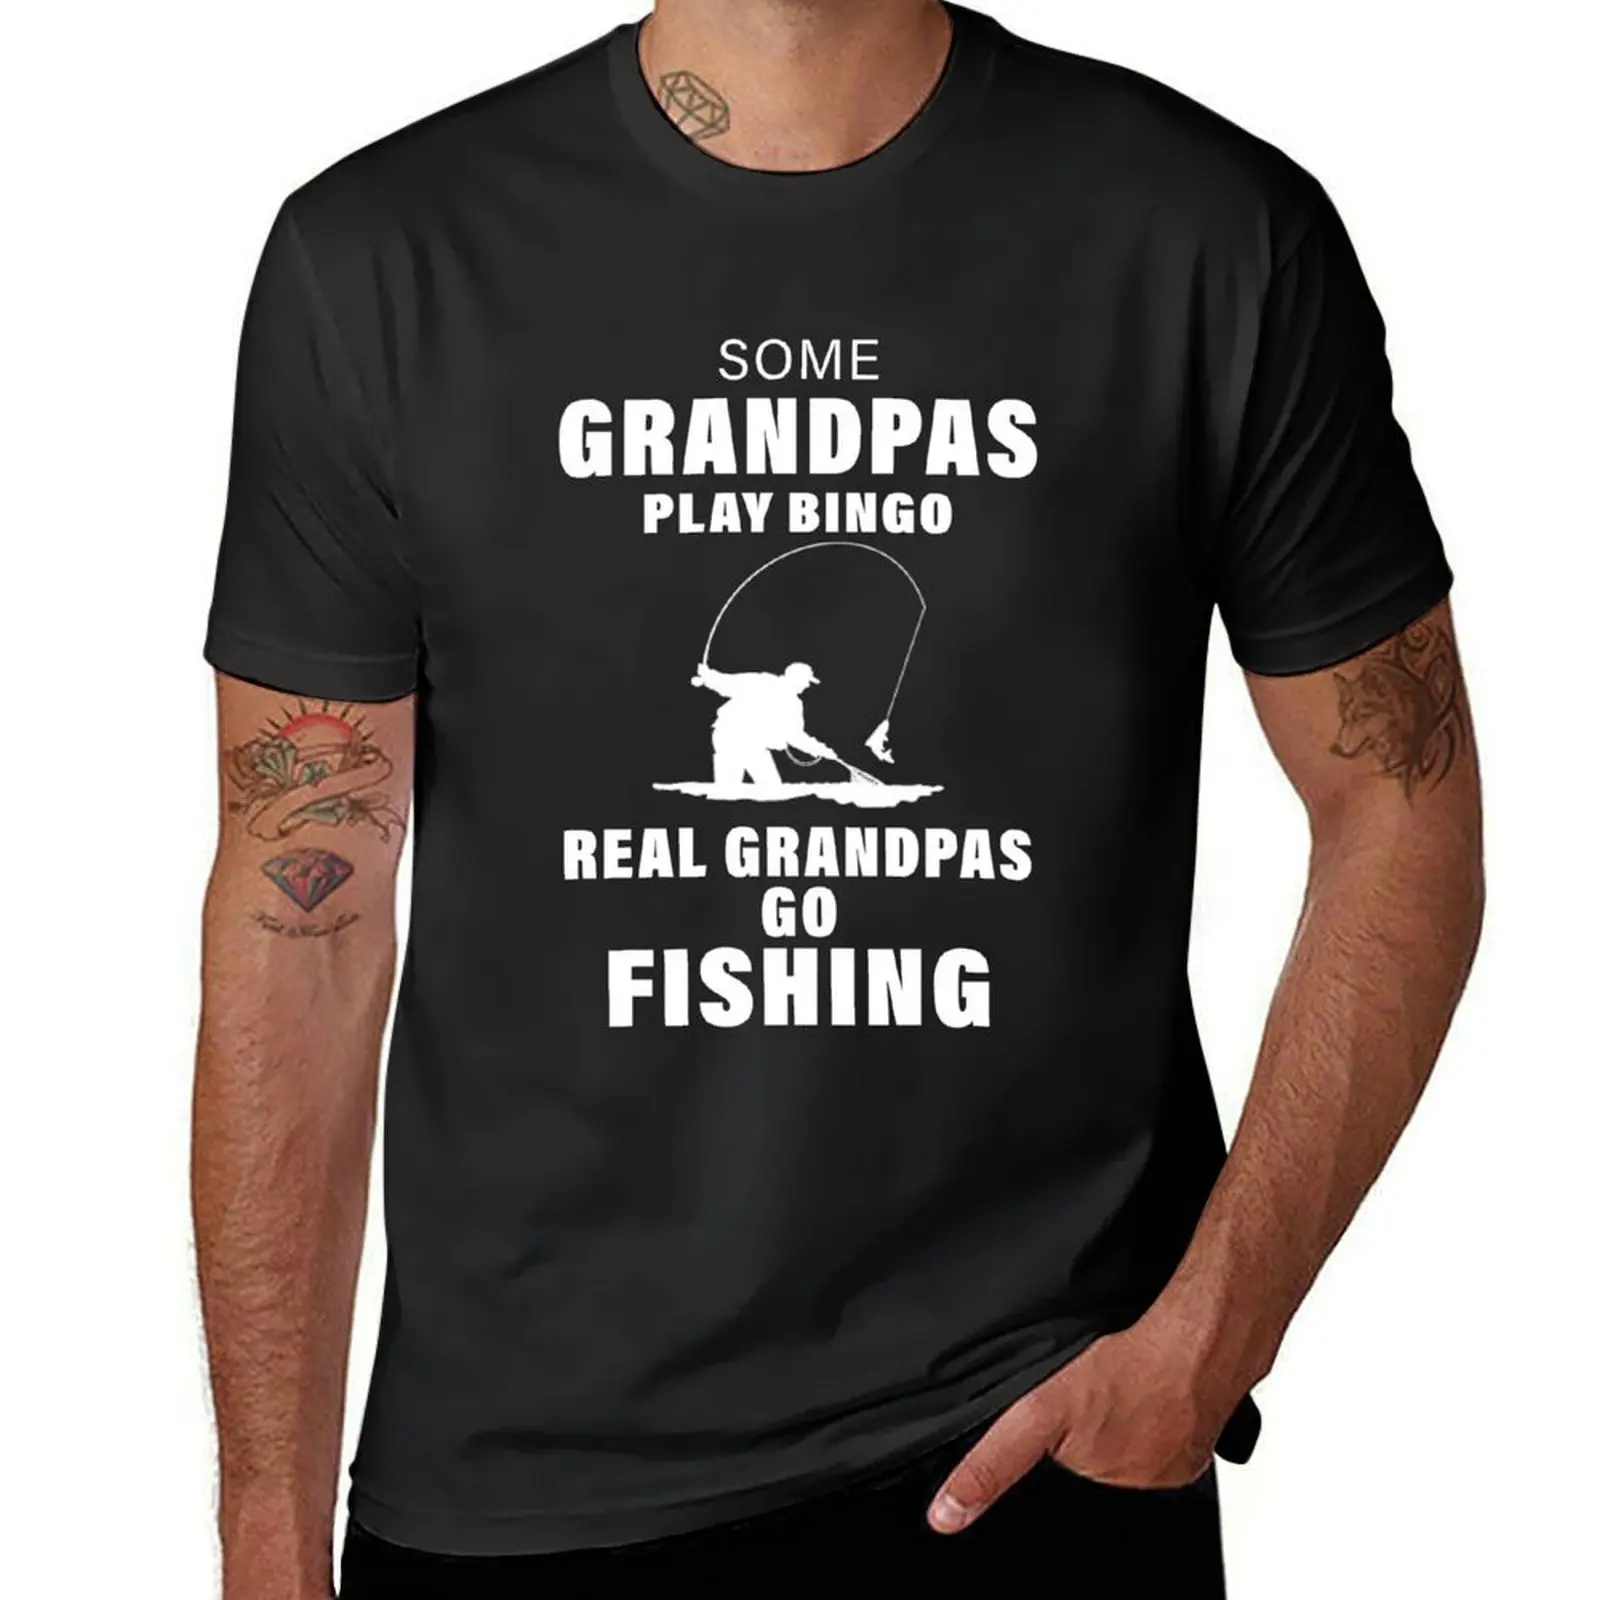 Fishing Funny Shirt Sarcasm Quotes Joke Hobbies Humor gift for grandpa T-Shirt tees anime cute clothes plain black t shirts men